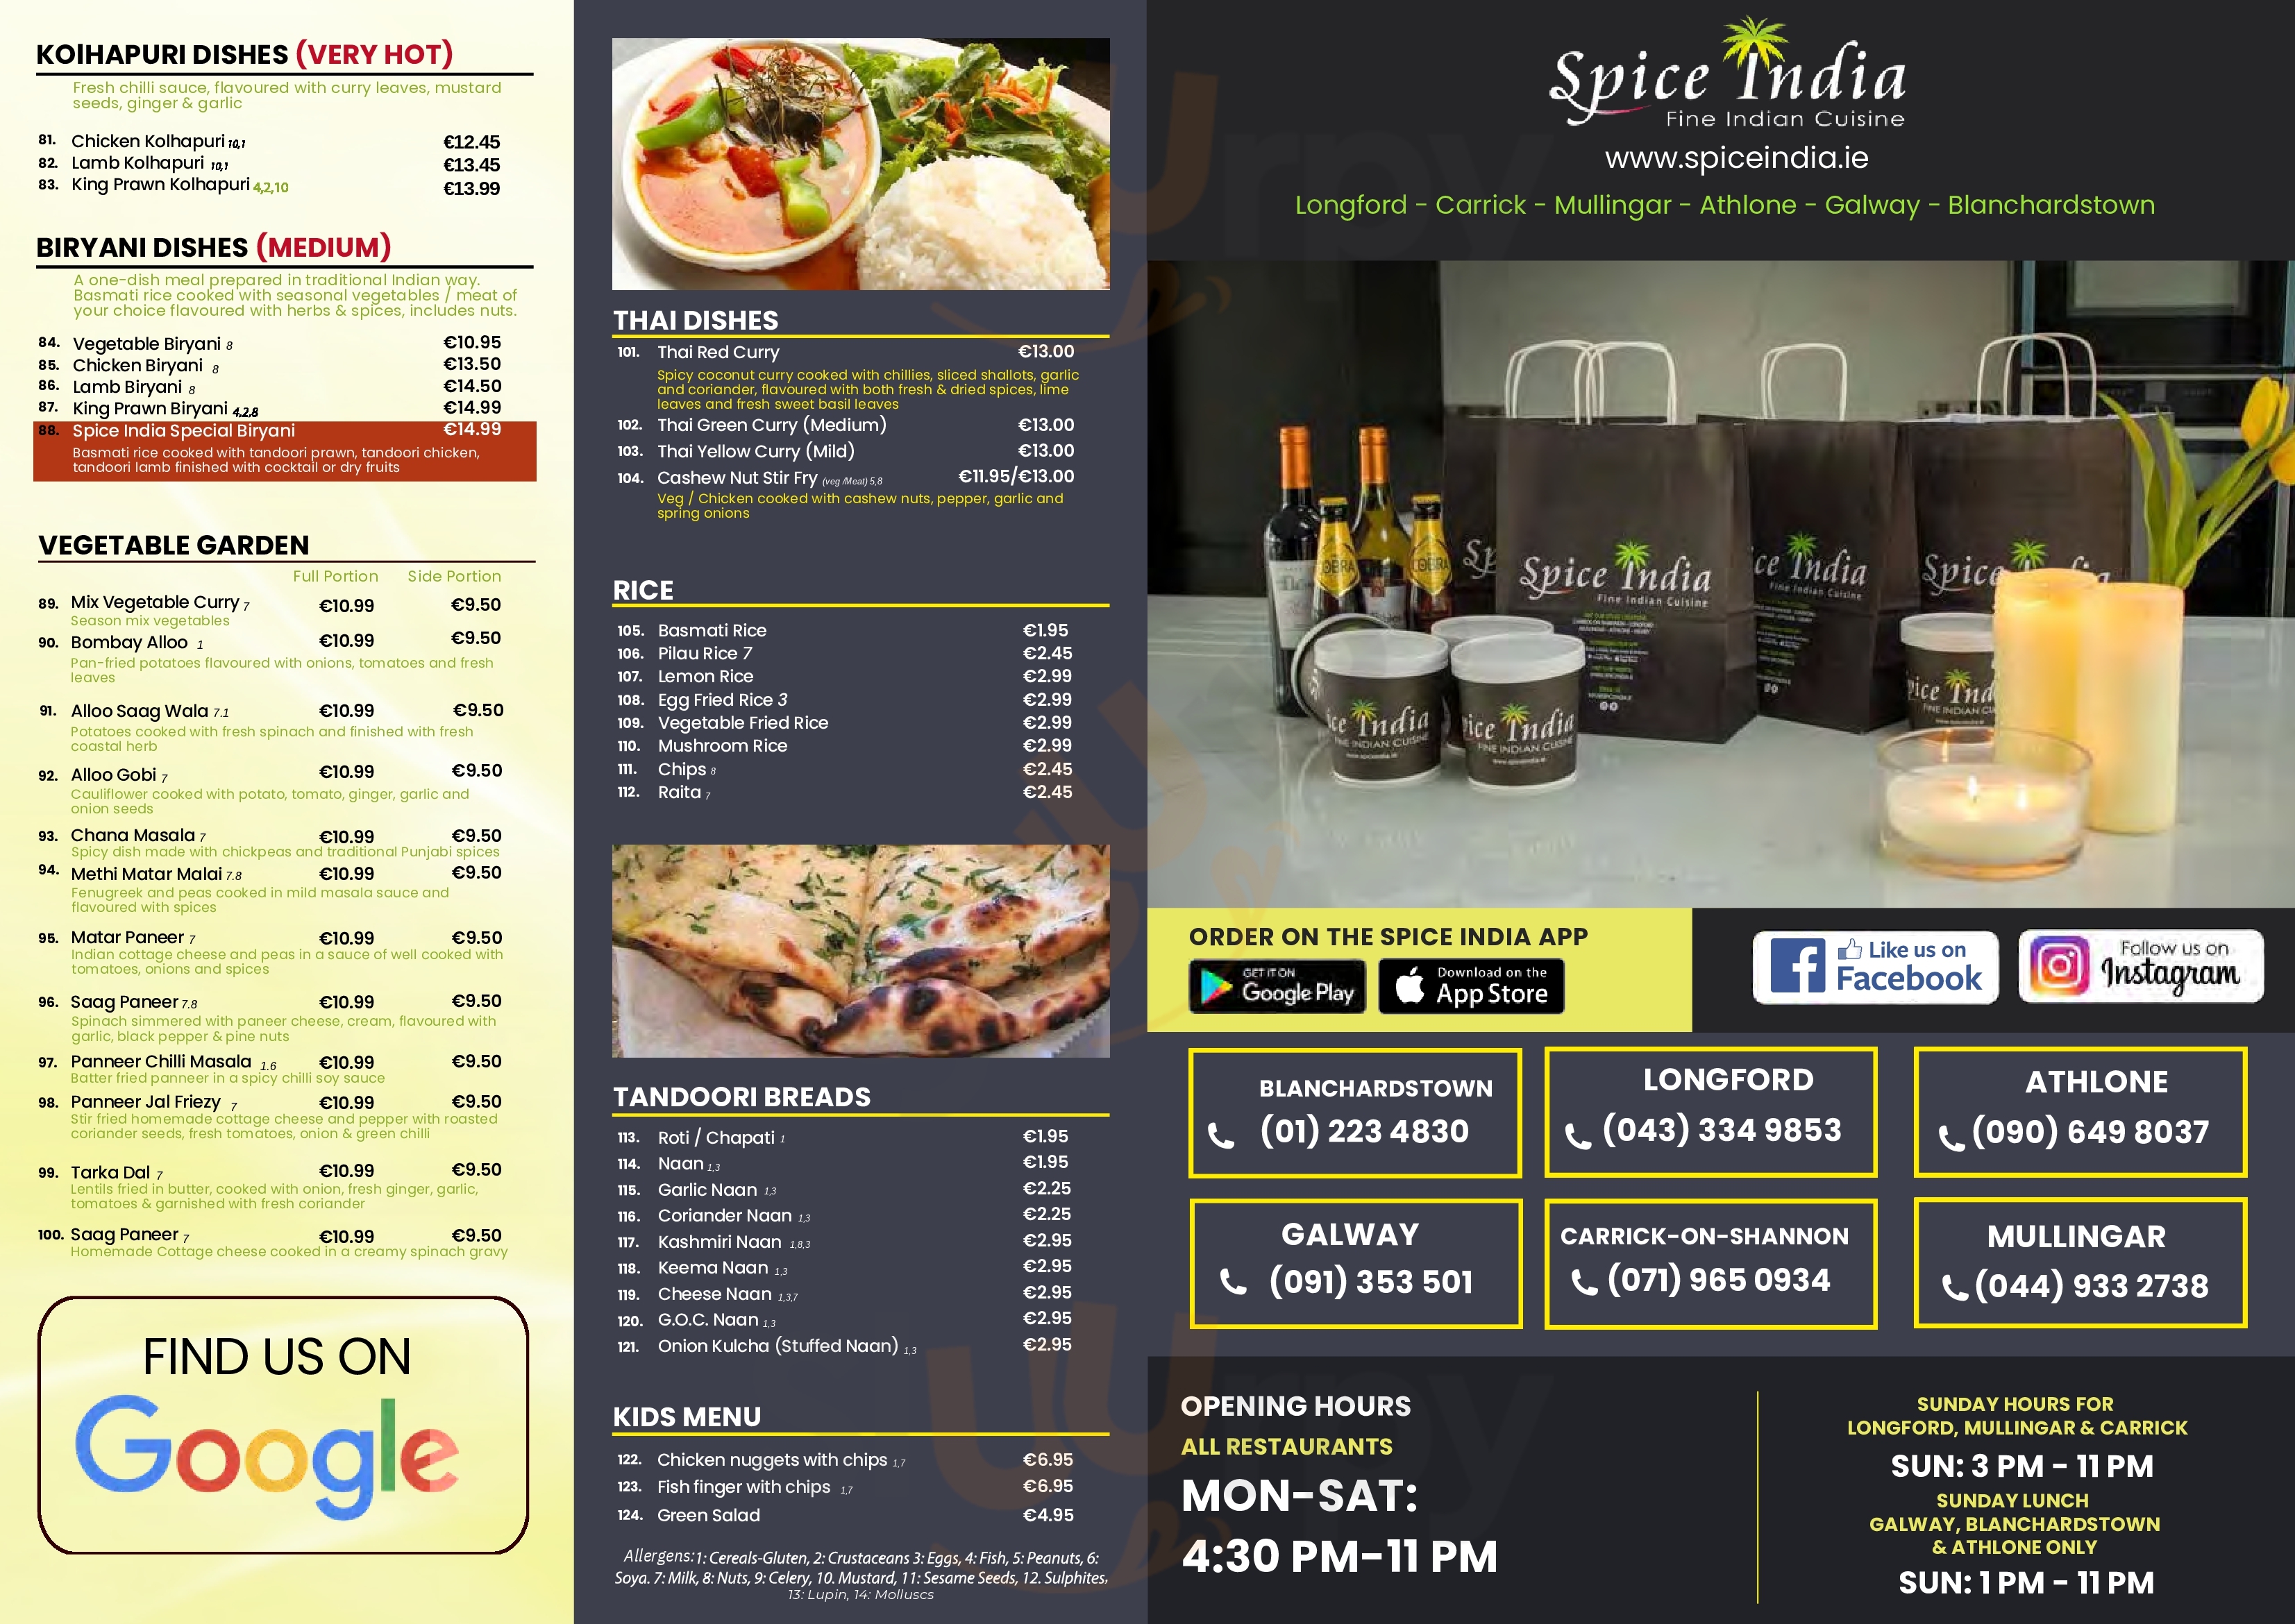 Spice Inida Fine Indian Cuisine Carrick-on-Shannon Menu - 1